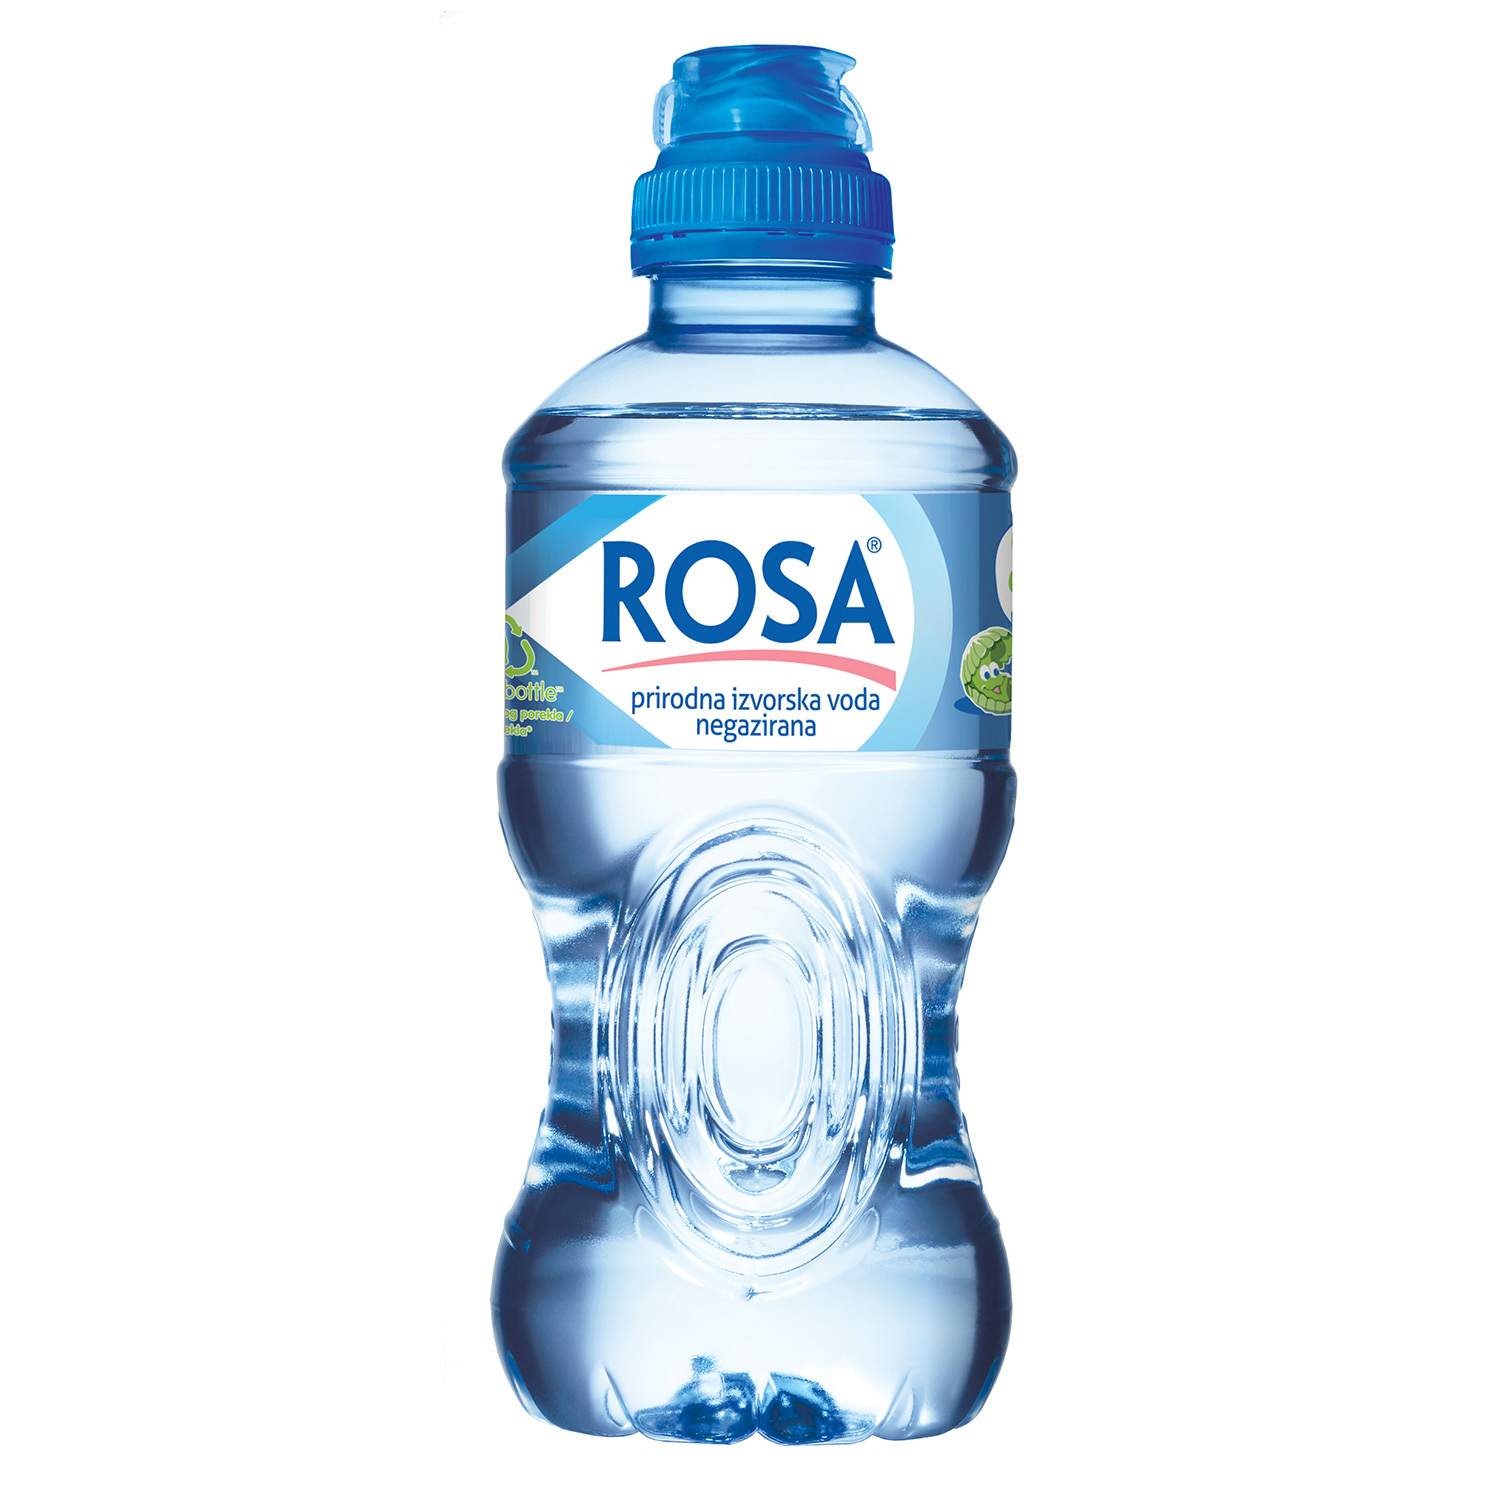 Вода киснет. Вода 0,7. Горджи вода. Вода Rosa Сербия. Фото воды красивое.